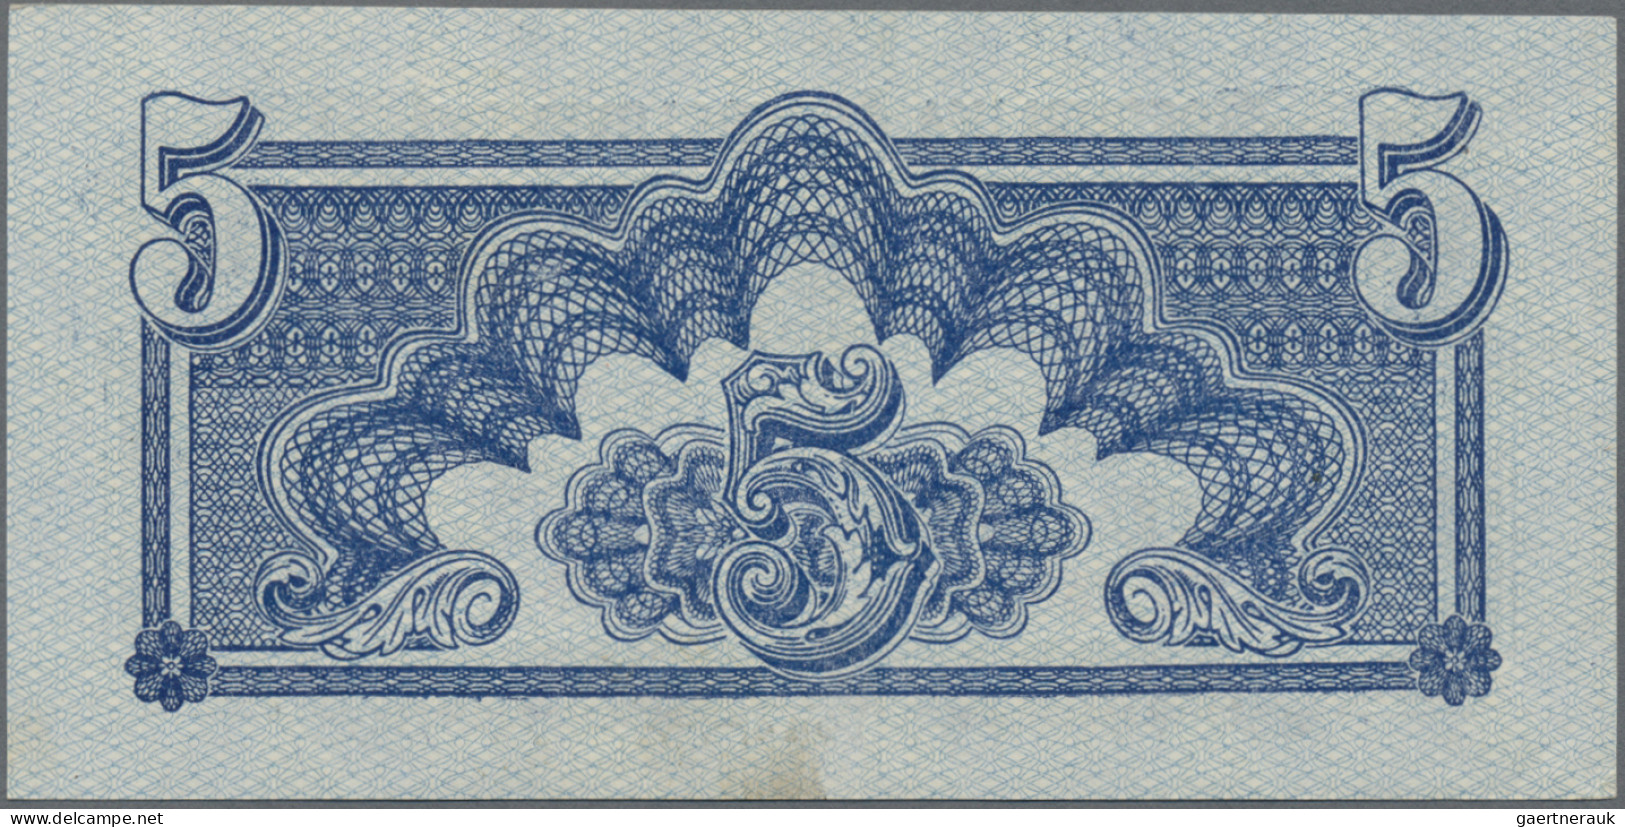 Czechoslovakia: Republika Československá, Lot With 7 Banknotes, 1944-1945 Series - Tschechoslowakei